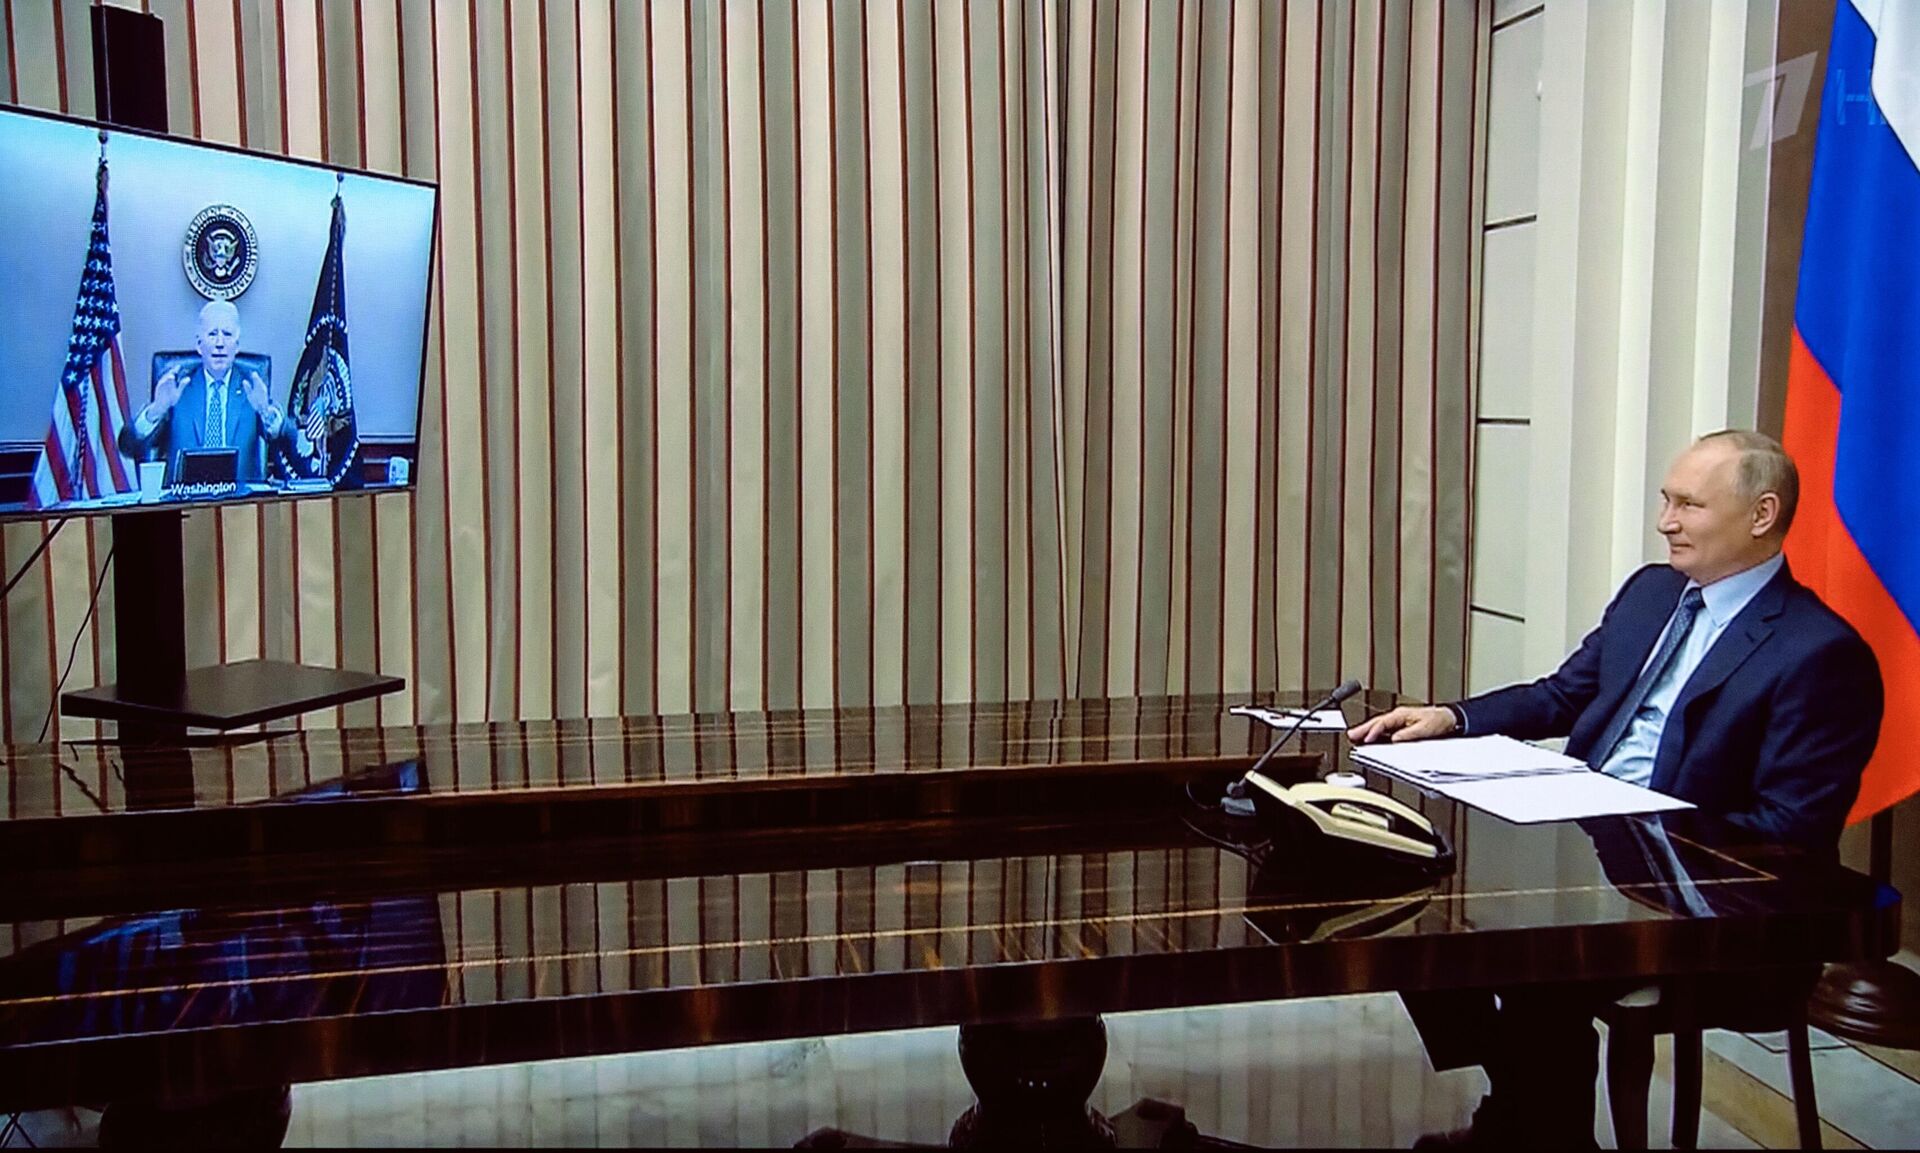 Presidente russo, Vladimir Putin, durante videoconferência com o presidente norte-americano, Joe Biden, em 7 de dezembro de 2021 - Sputnik Brasil, 1920, 30.12.2021